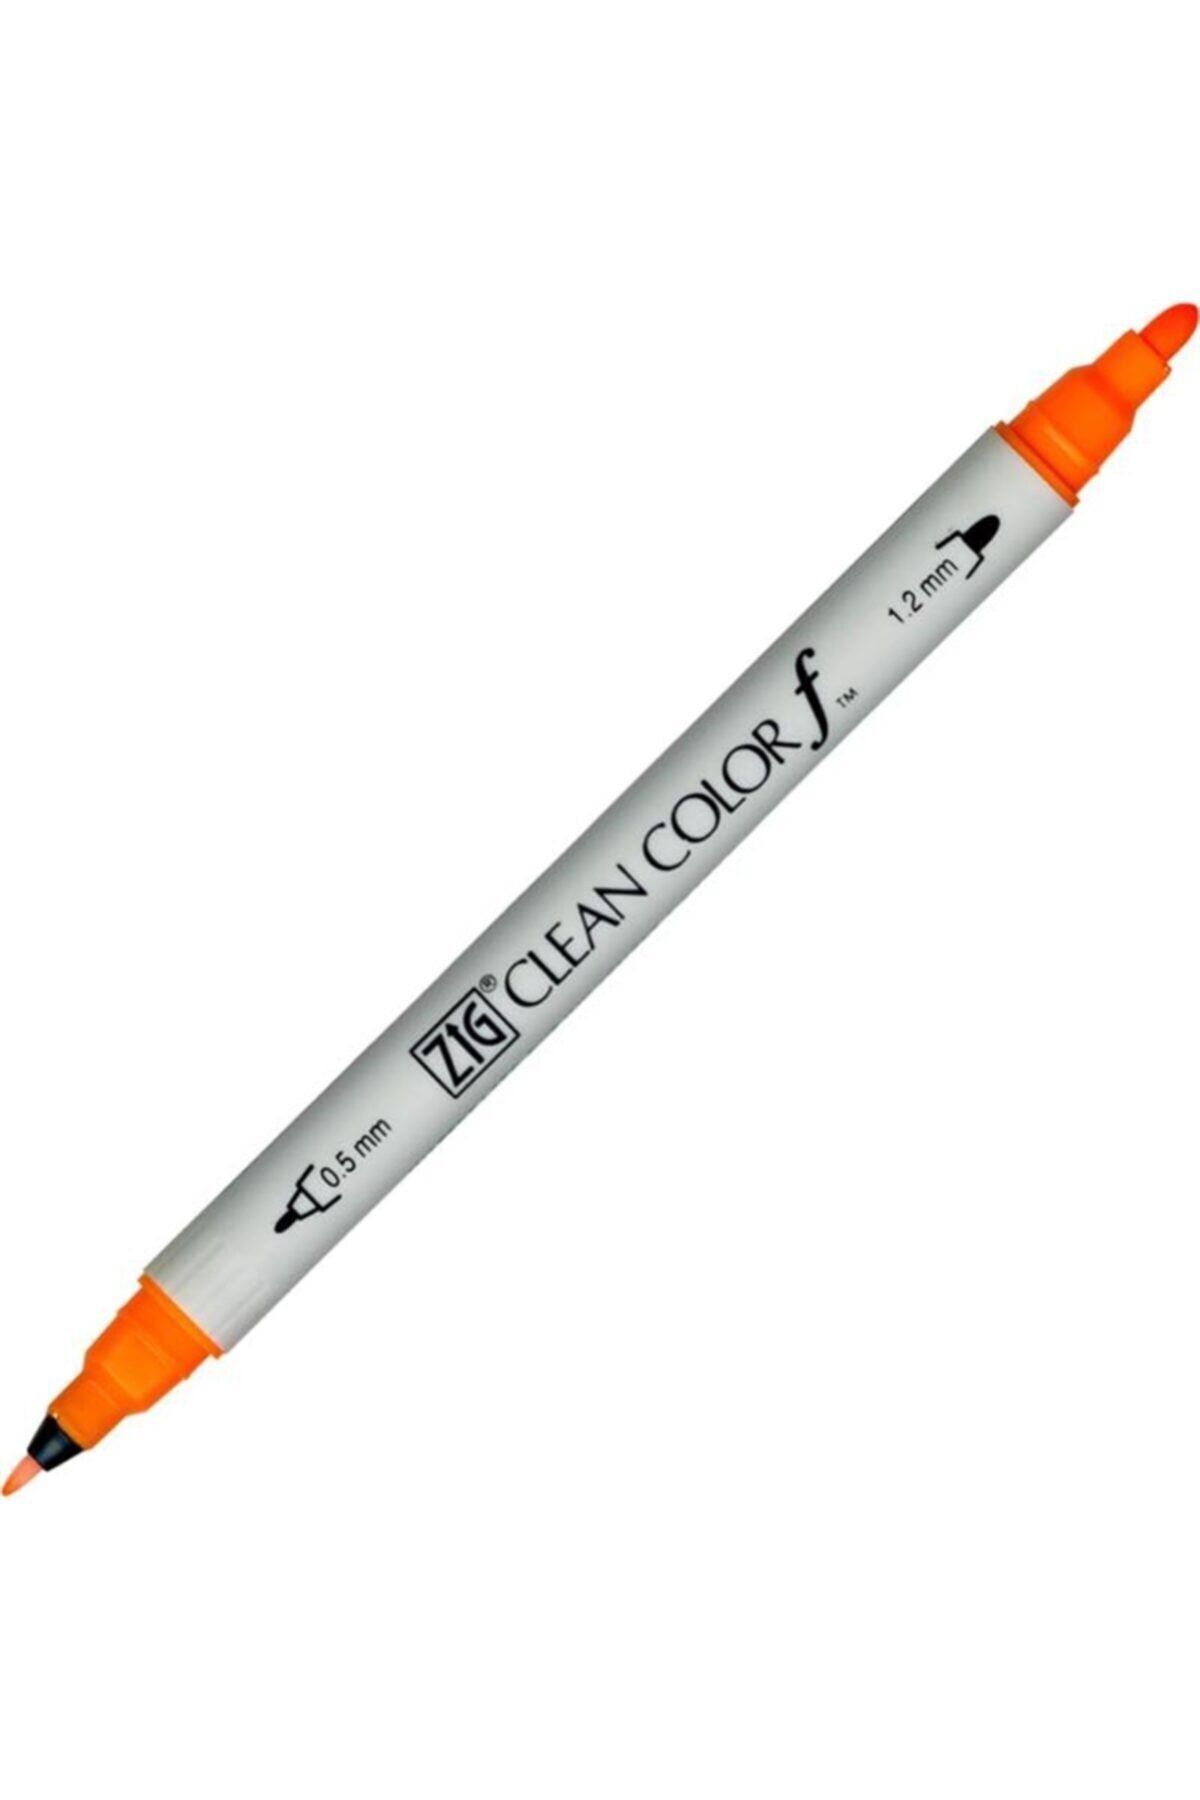 Zig Clean Color F Tcs-6000t 002 Fl Orange Çift Taraflı Kalem